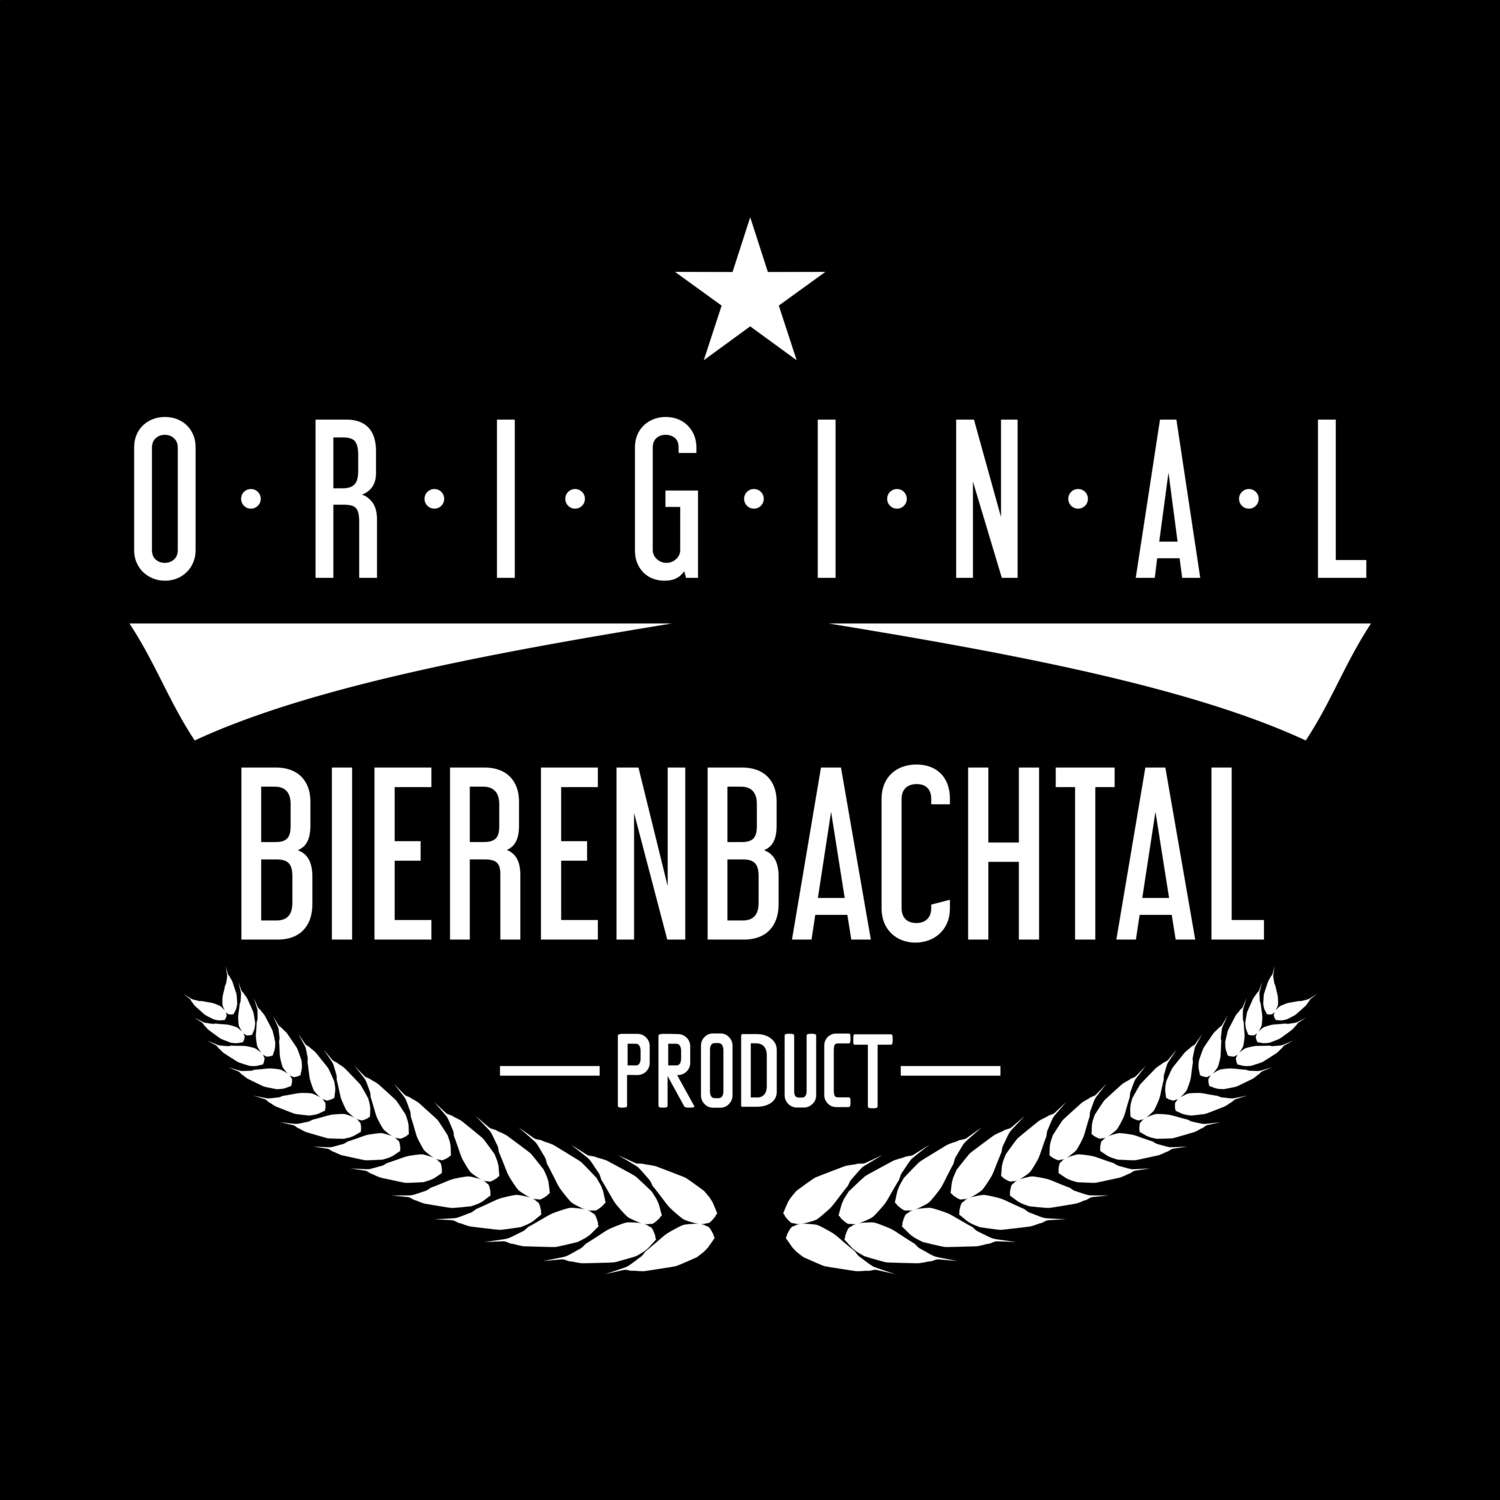 Bierenbachtal T-Shirt »Original Product«